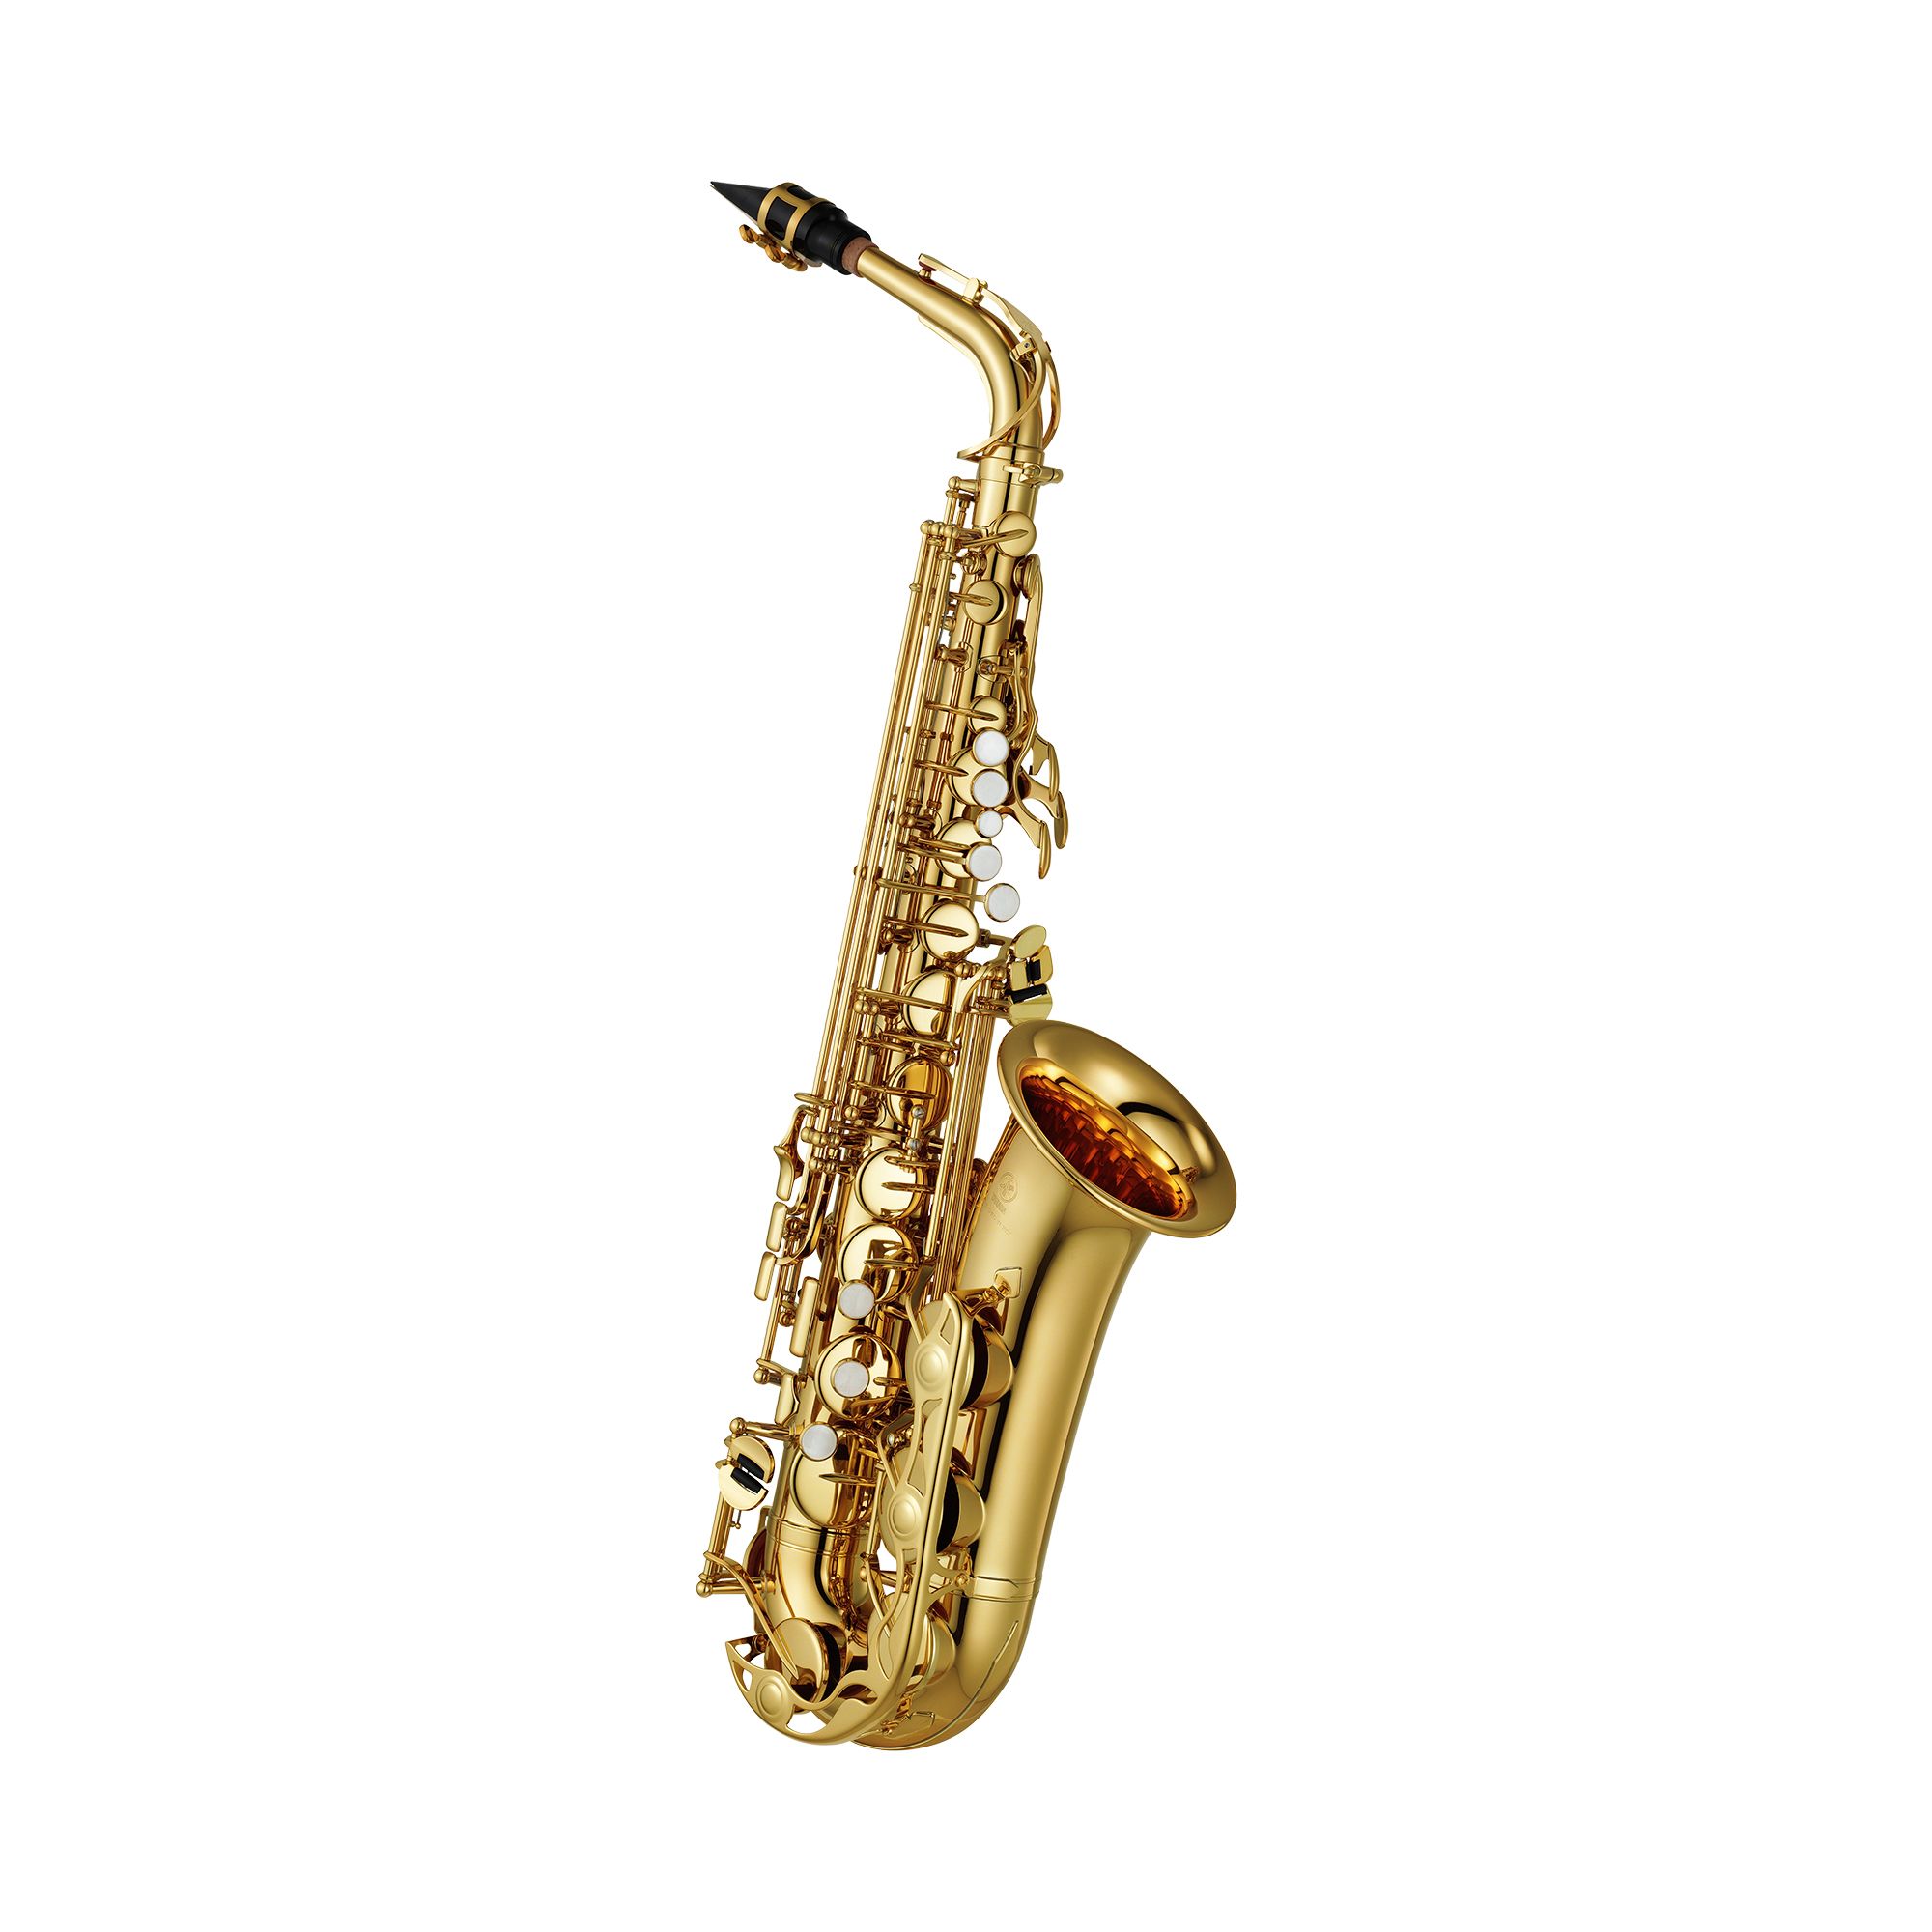 YAS-280 - Overview - Saxophones - Brass & Woodwinds - Musical 